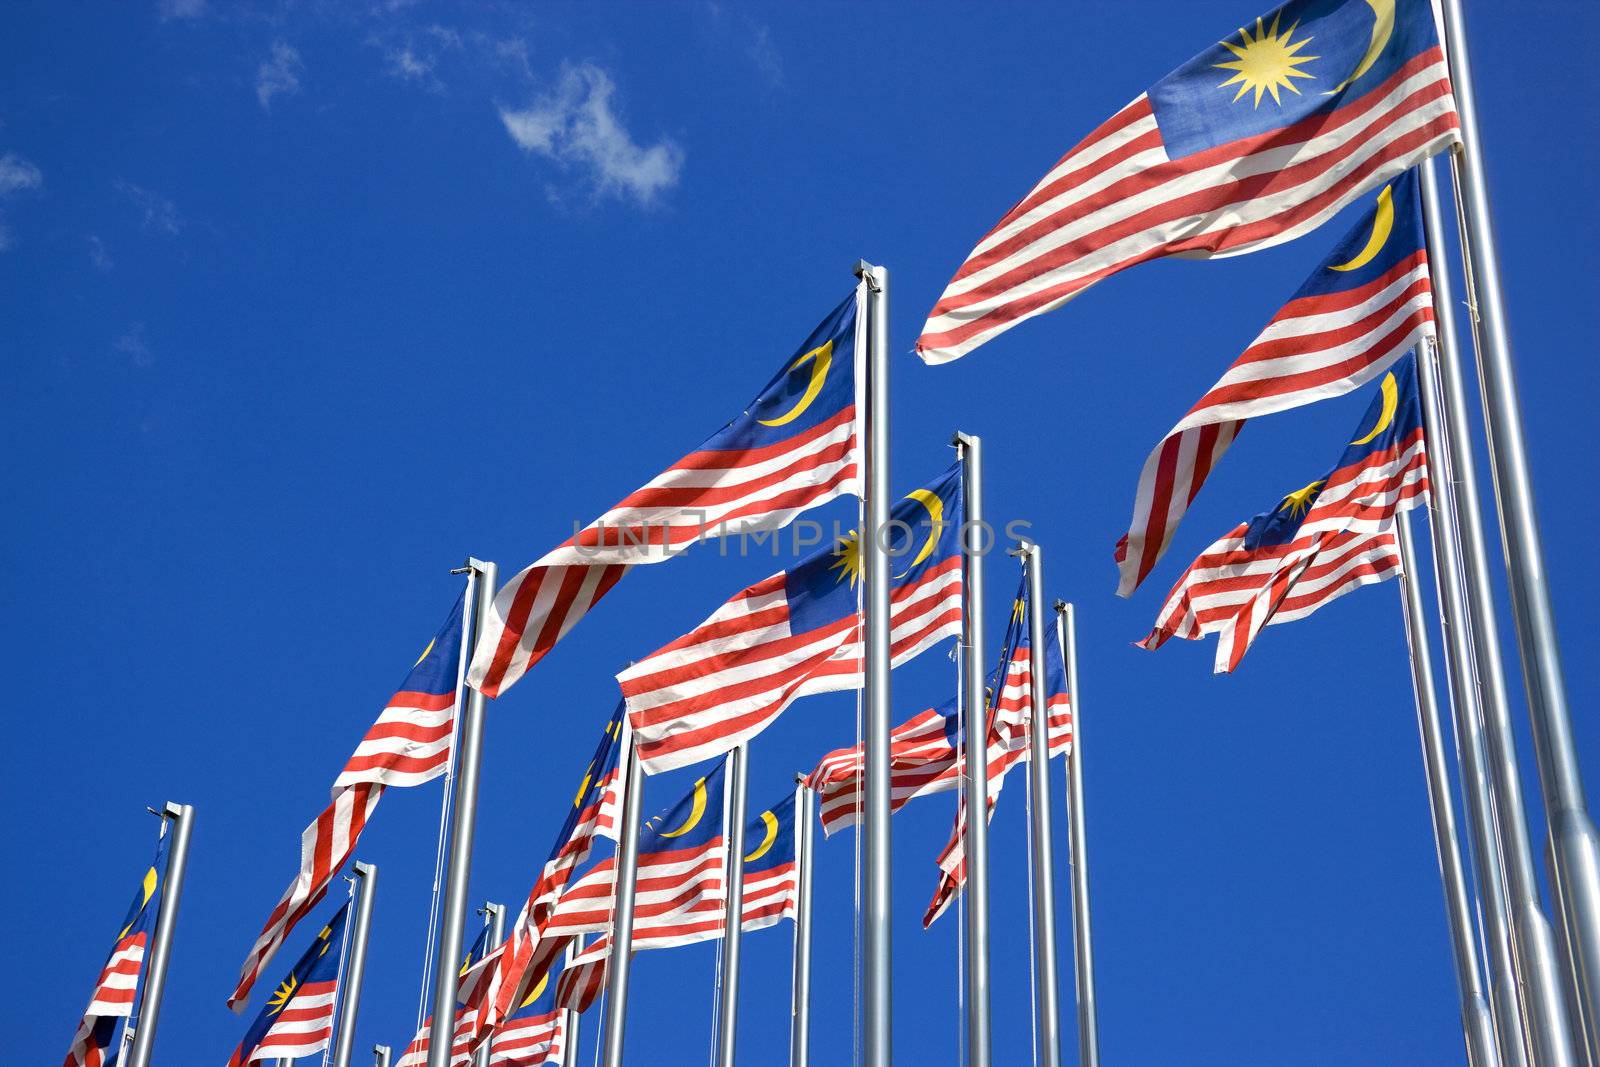 Malaysian Flags by shariffc